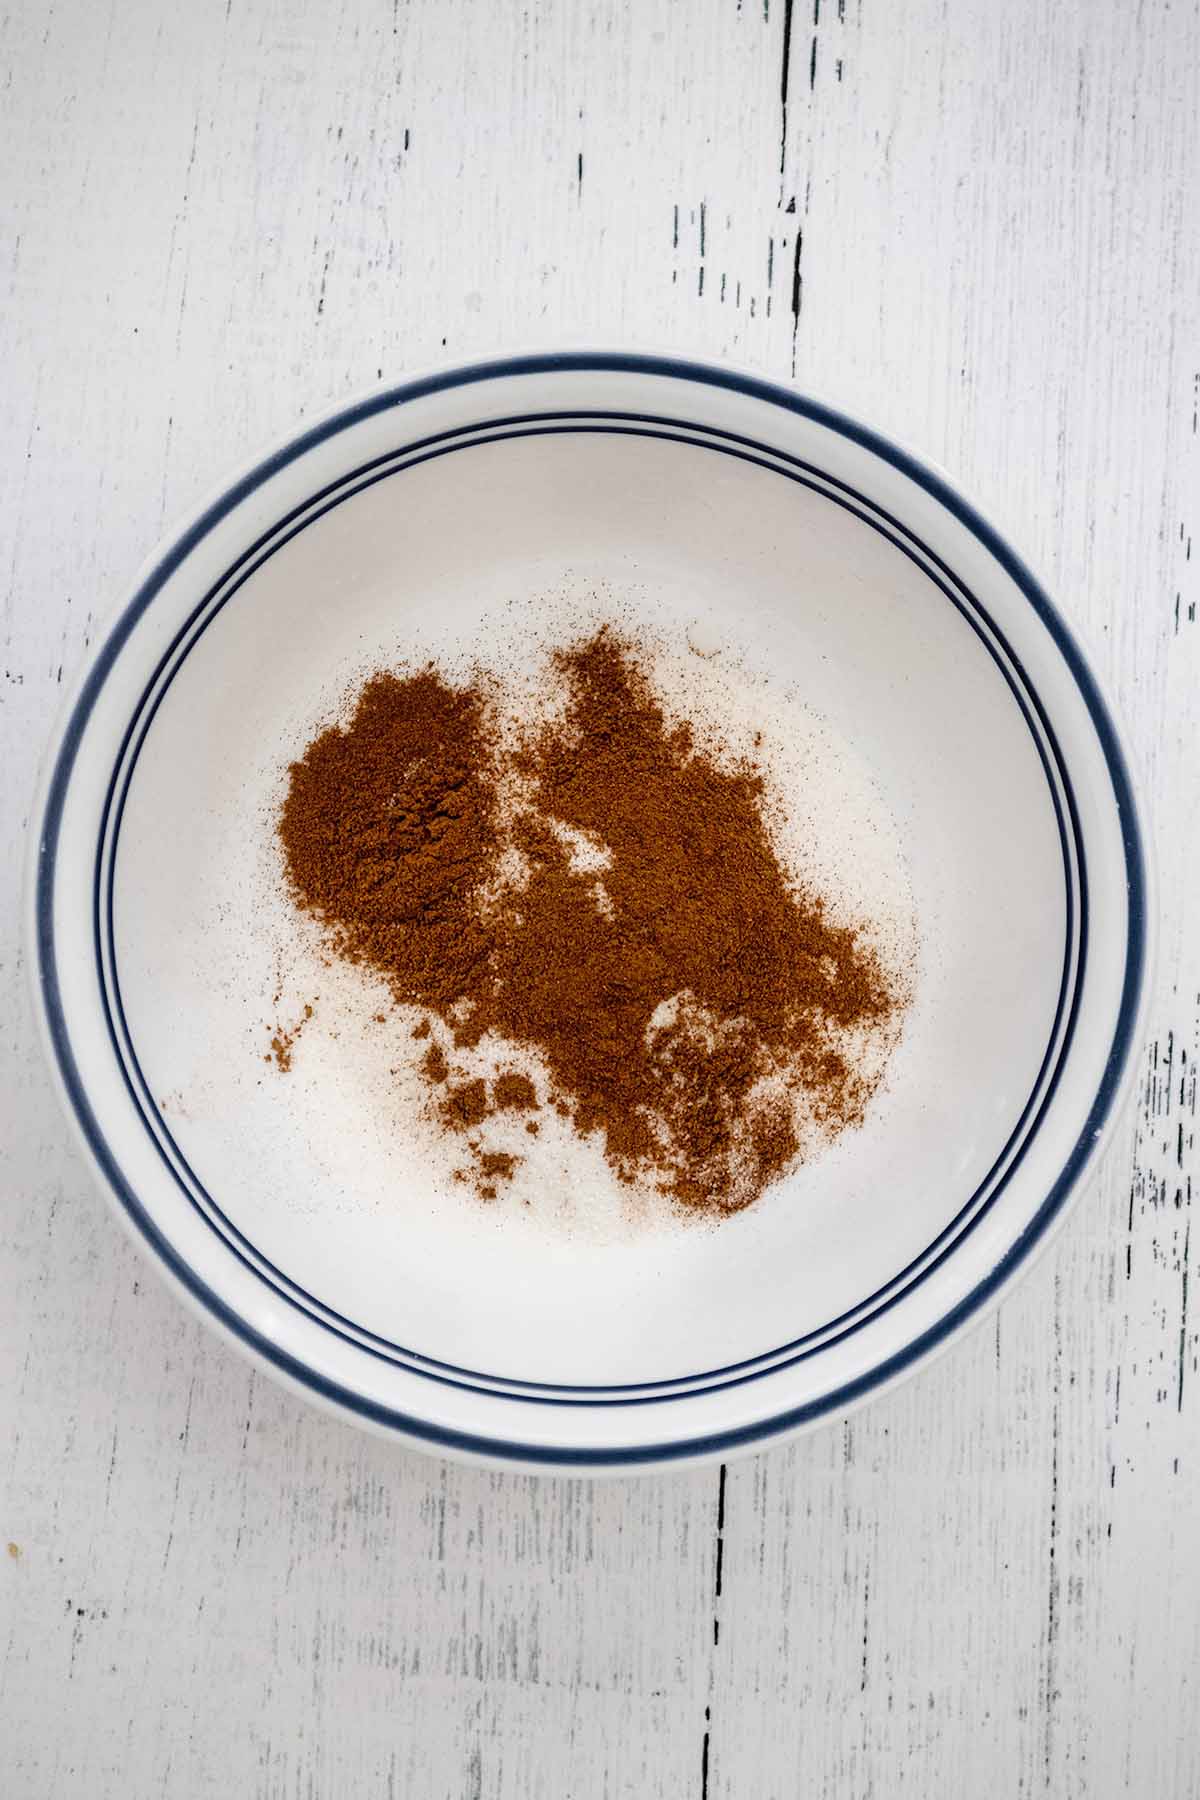 Granulated sugar and cinnamon in a small white bowl.